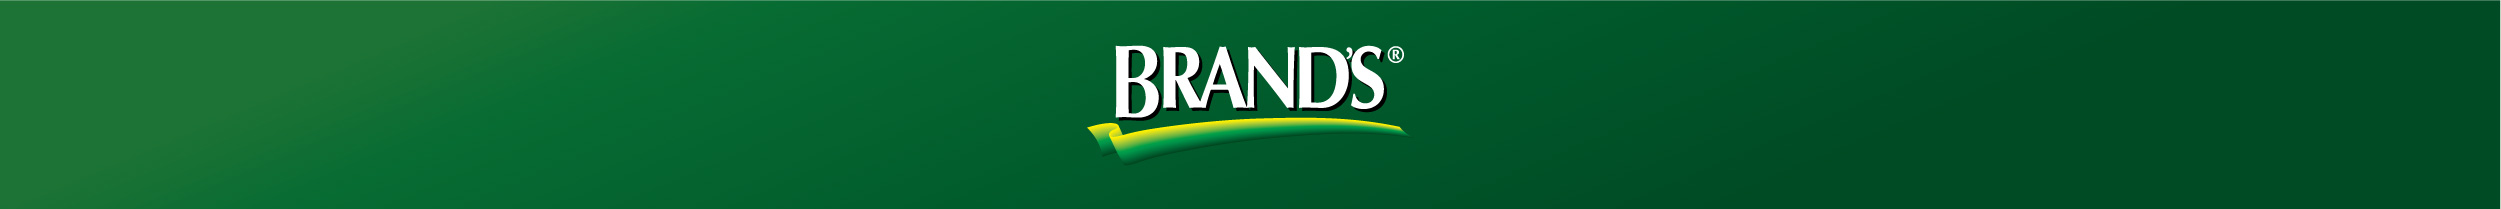 brands_header